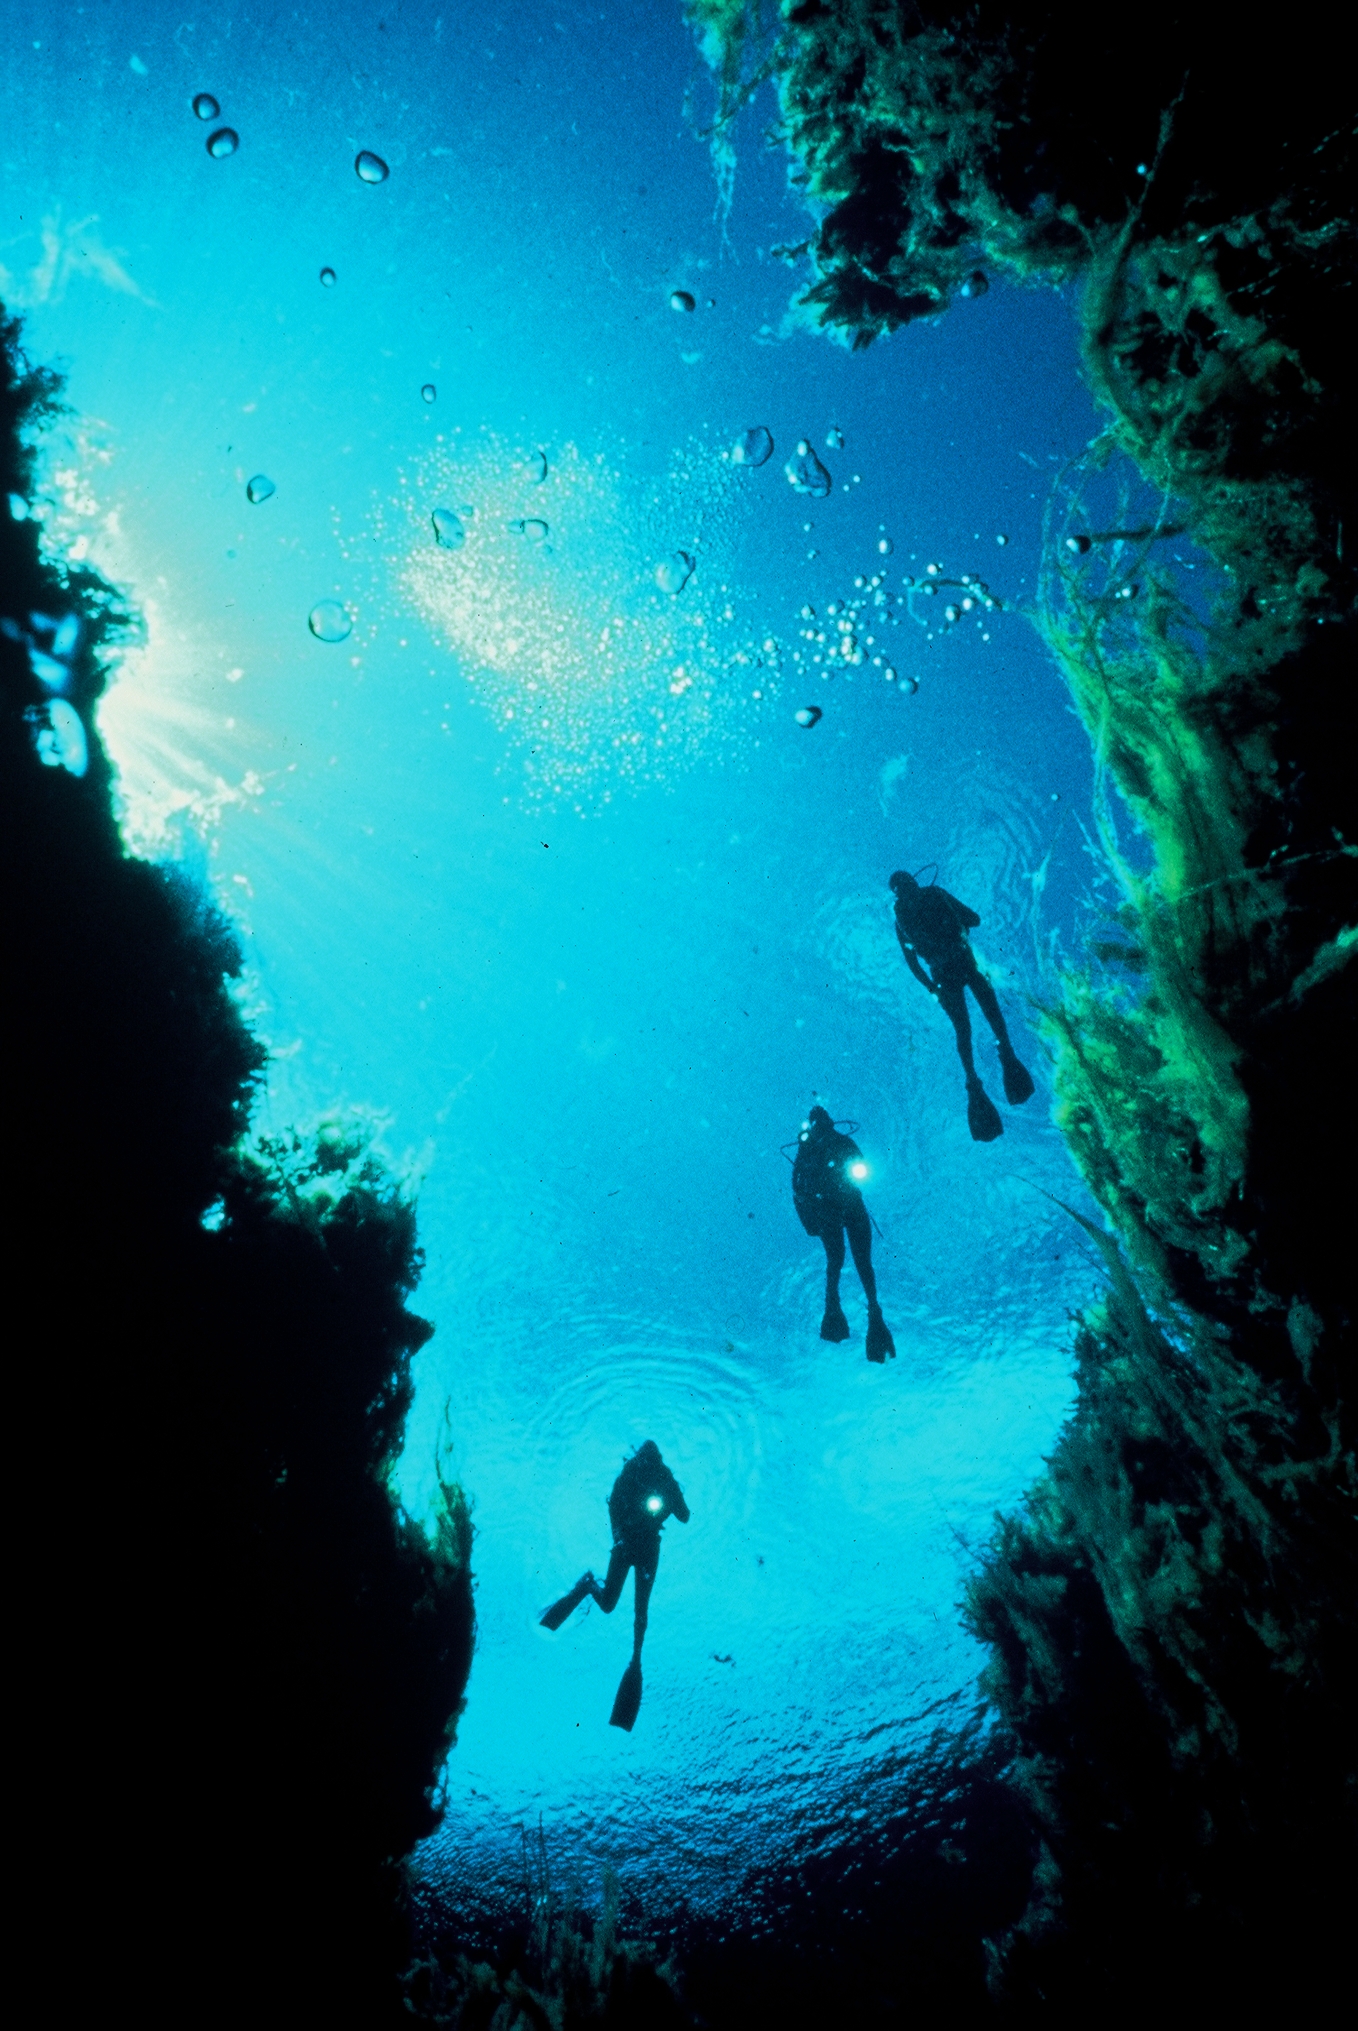 Underwater Photo by David Doubilit